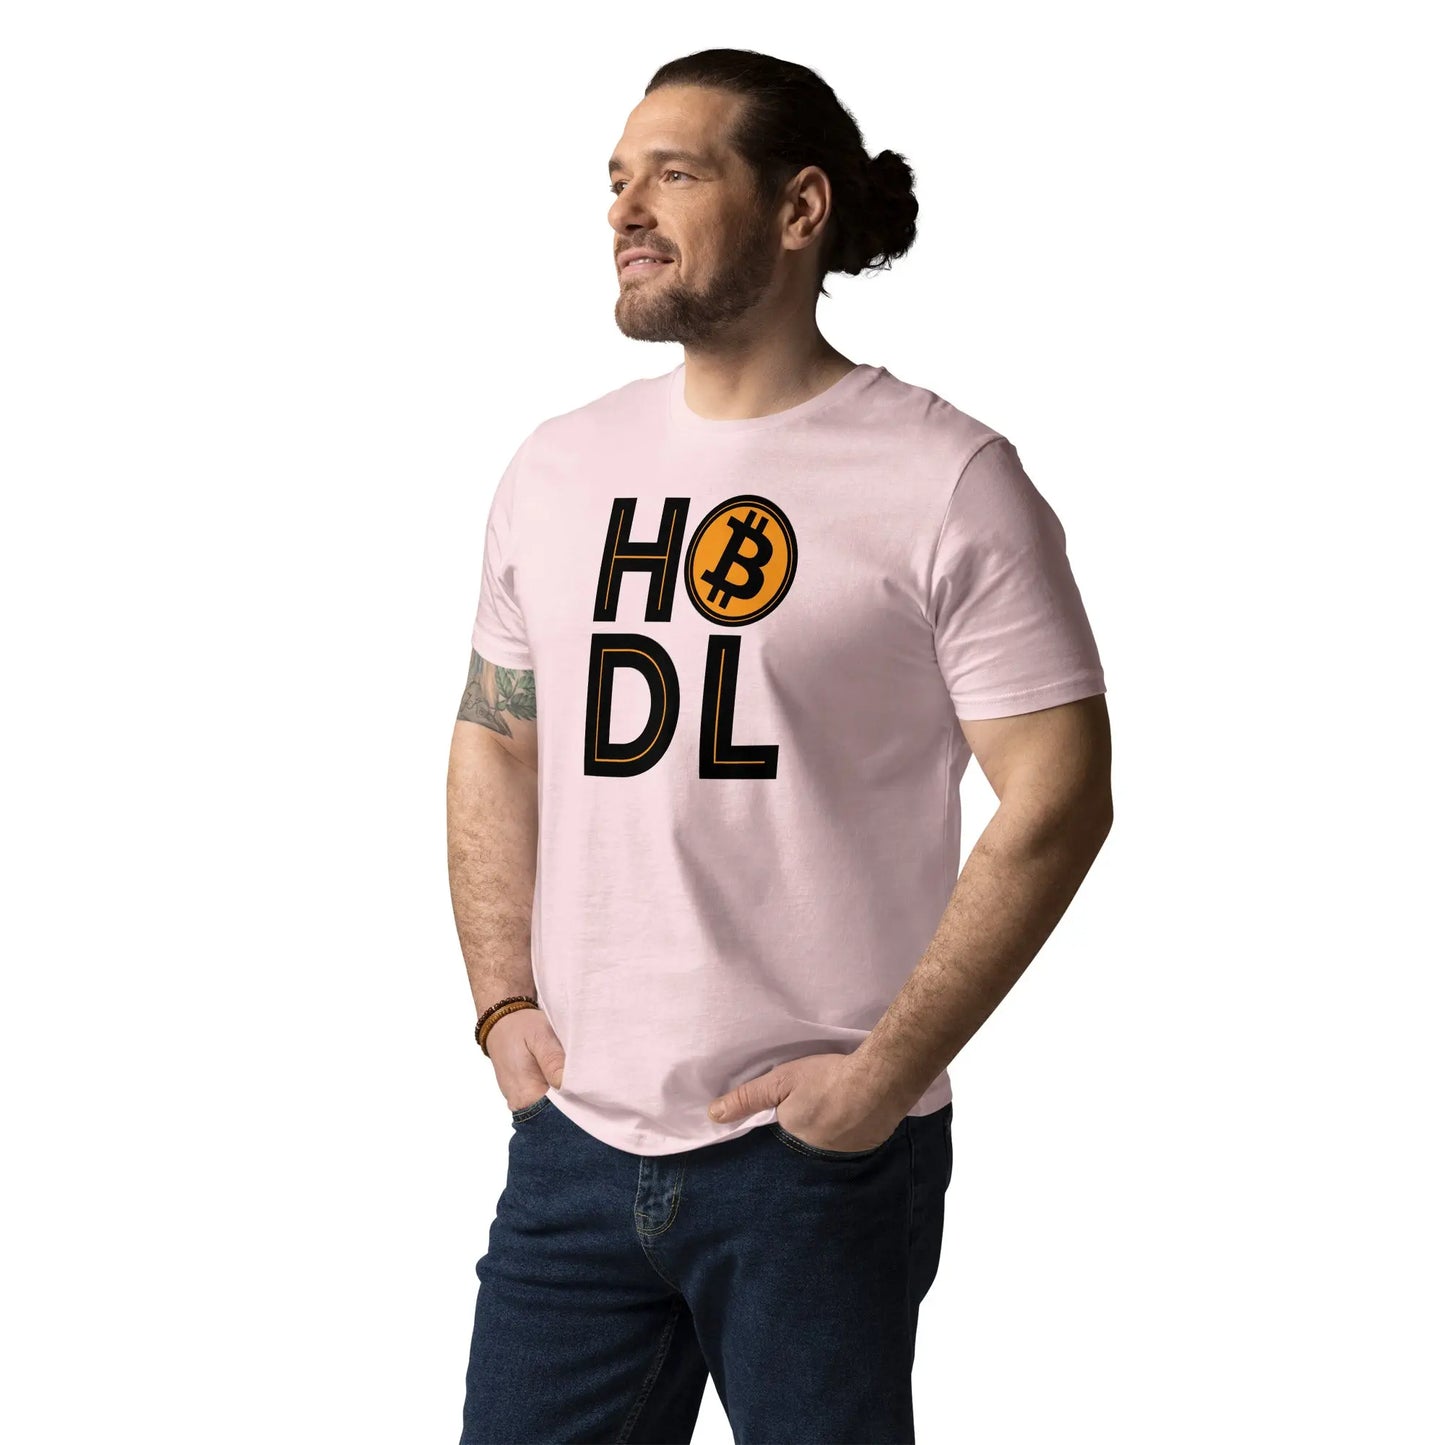 HODL - Premium Unisex Organic Cotton Bitcoin T-shirt Pink Color